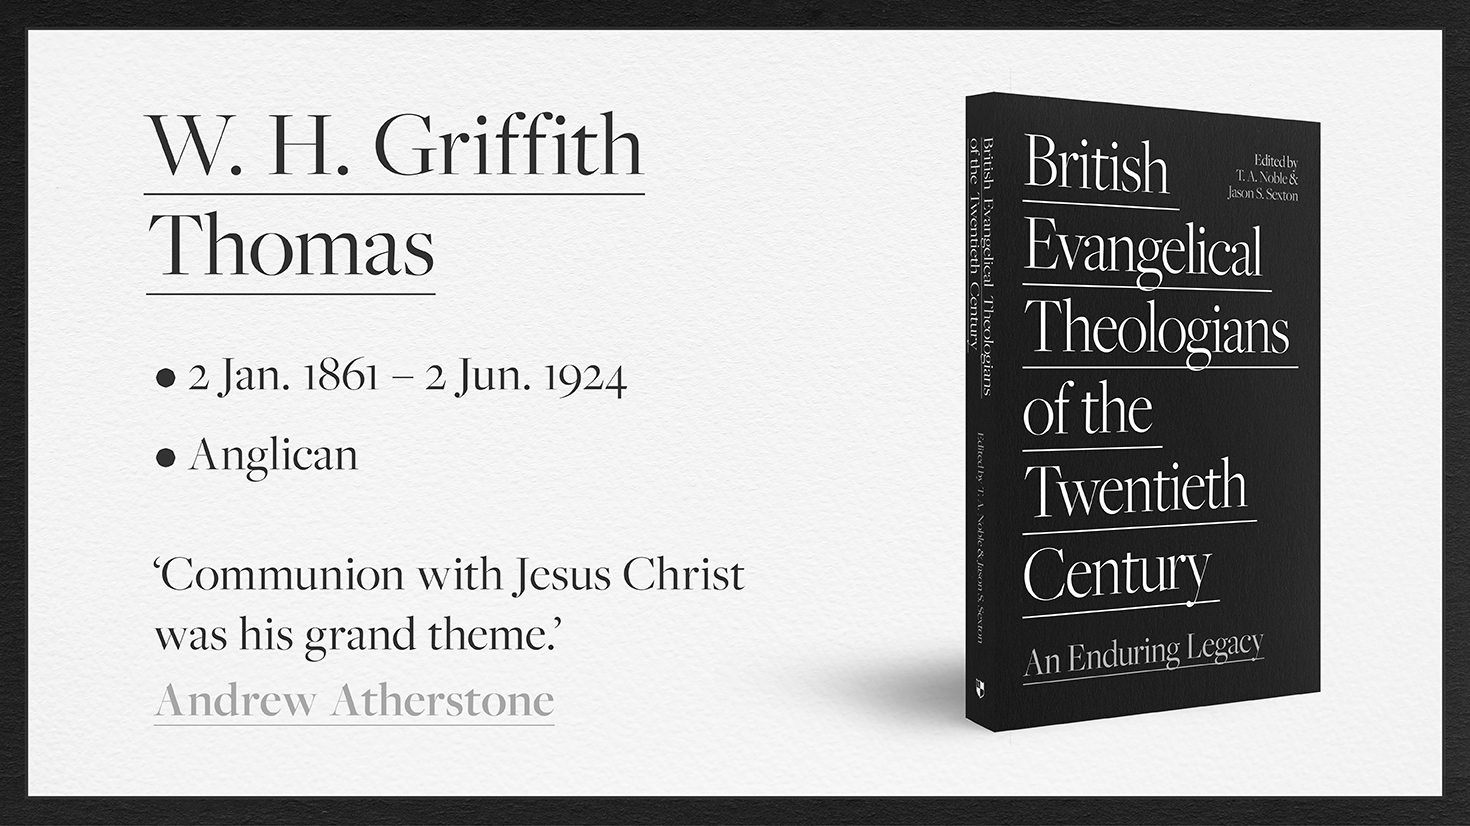 W. H. Griffith Thomas: British Evangelical Theologian of the Twentieth Century